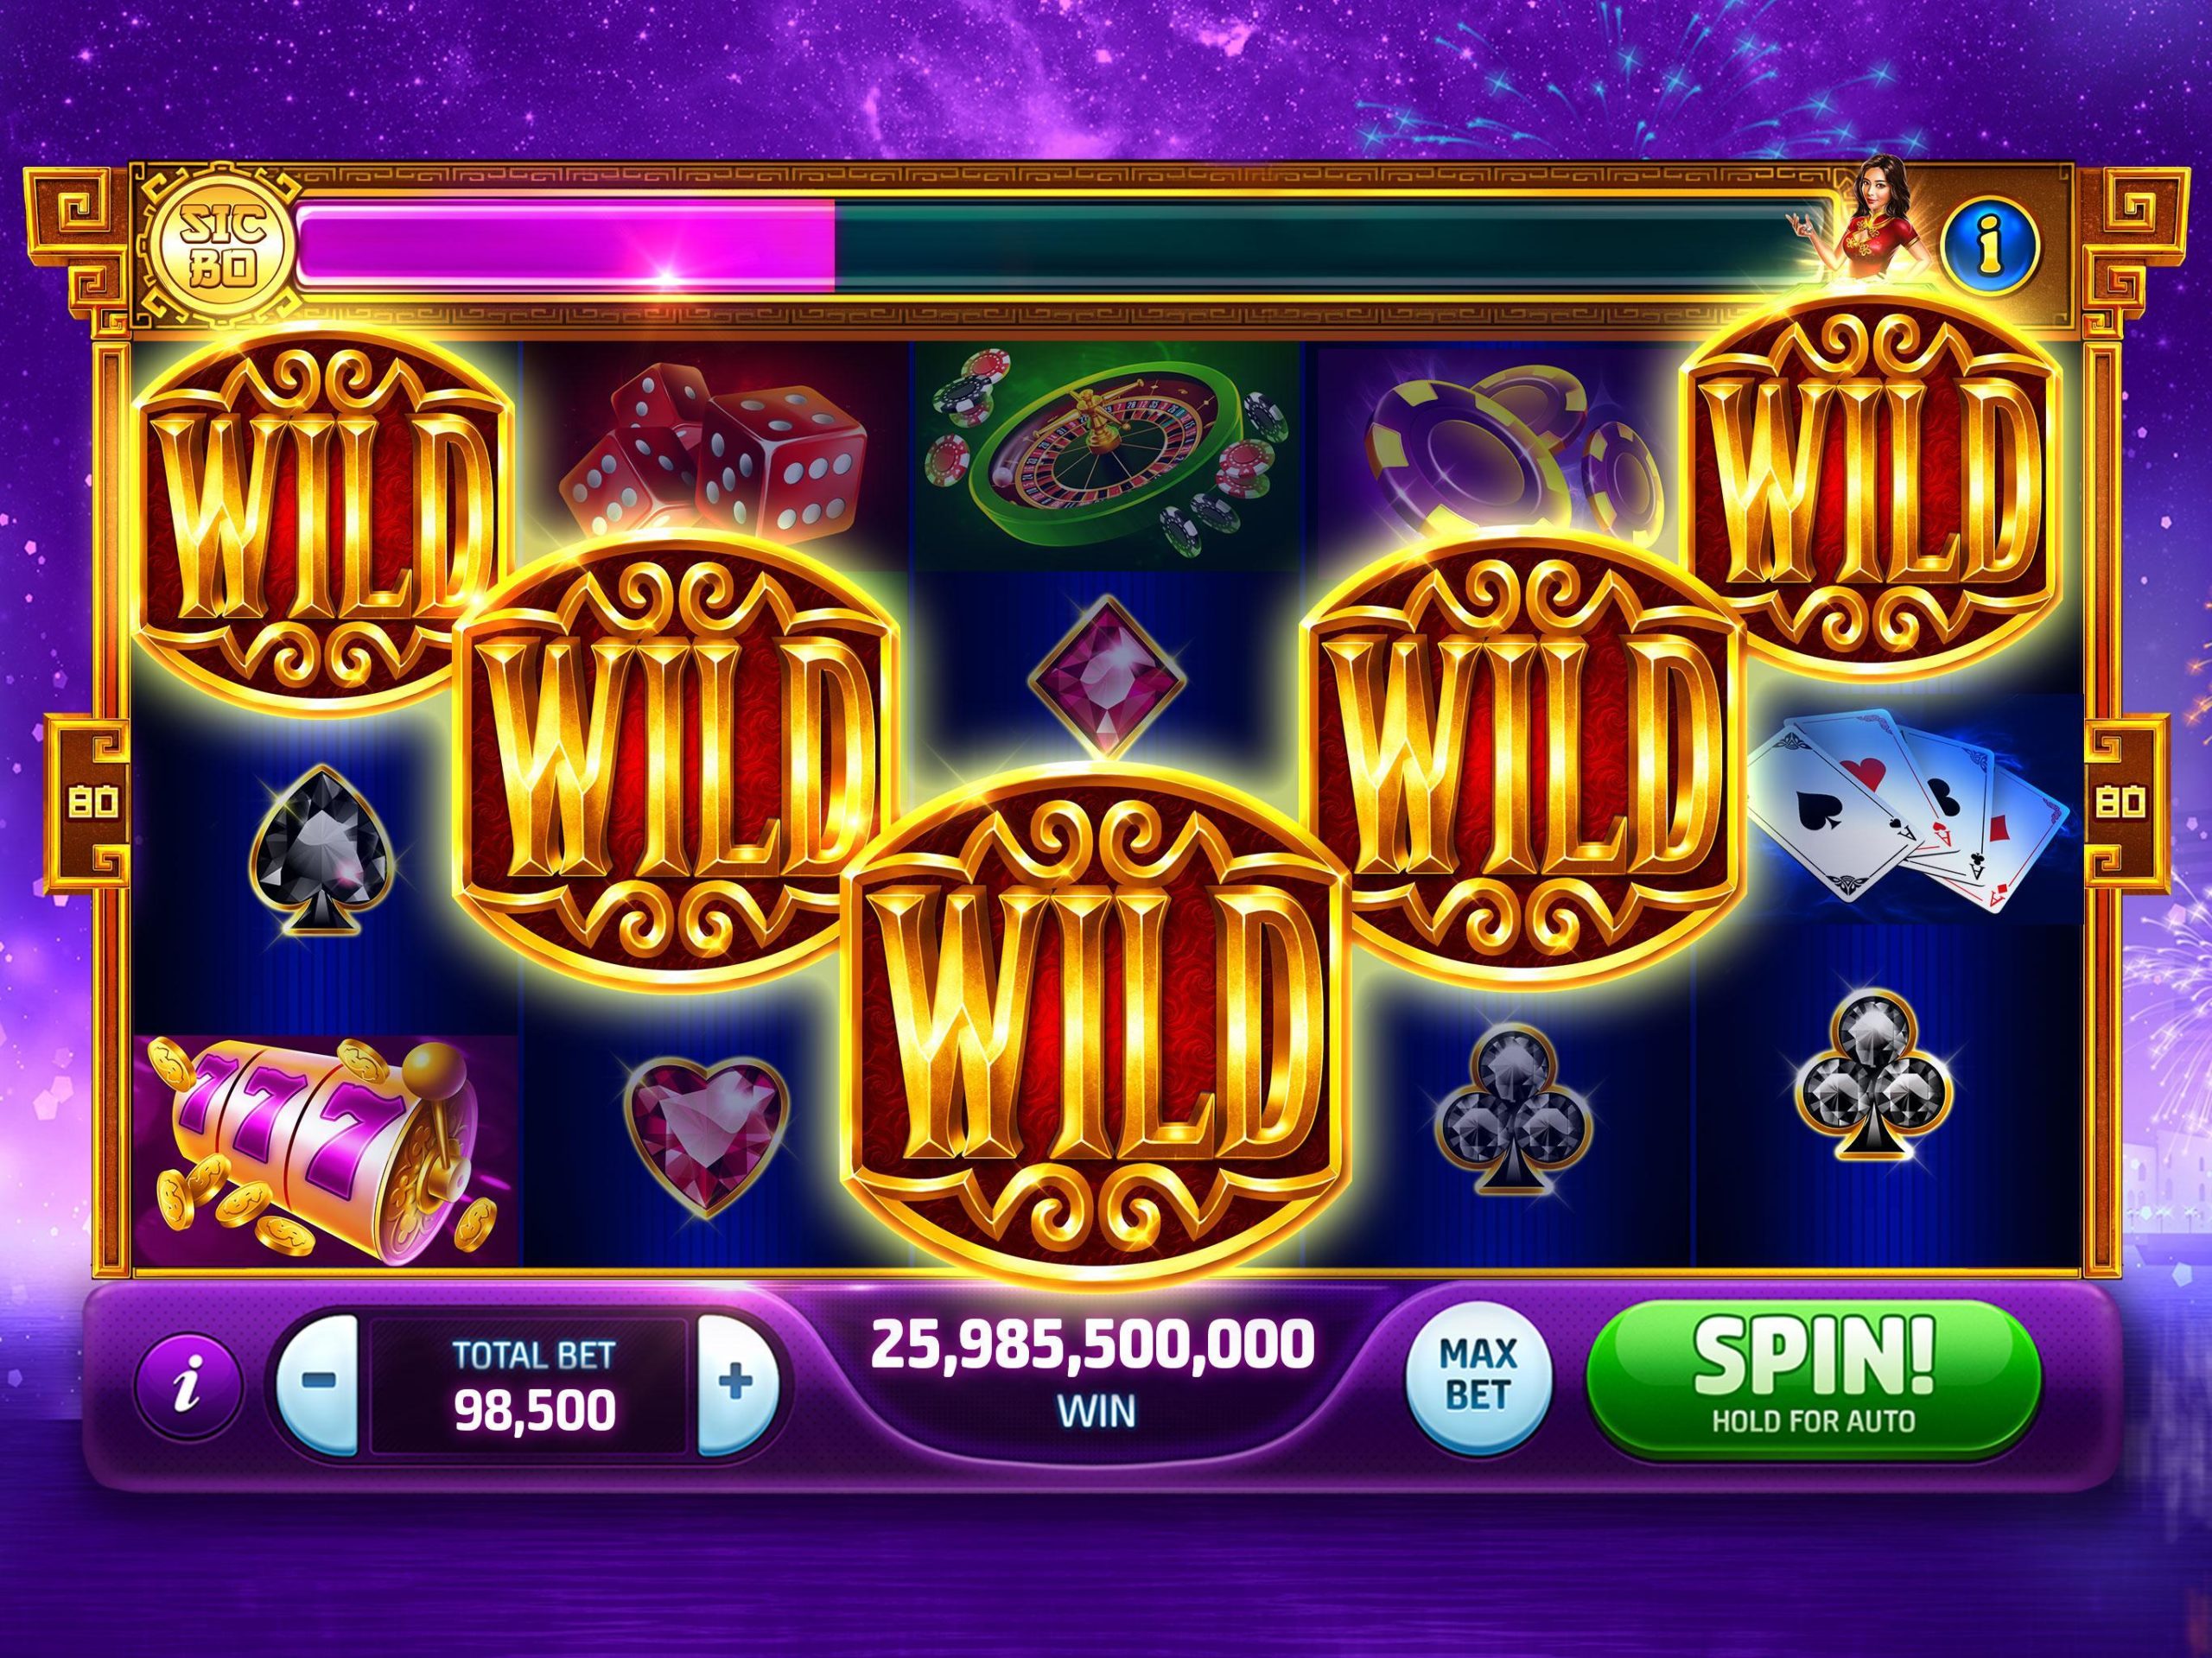 casino slots app store free